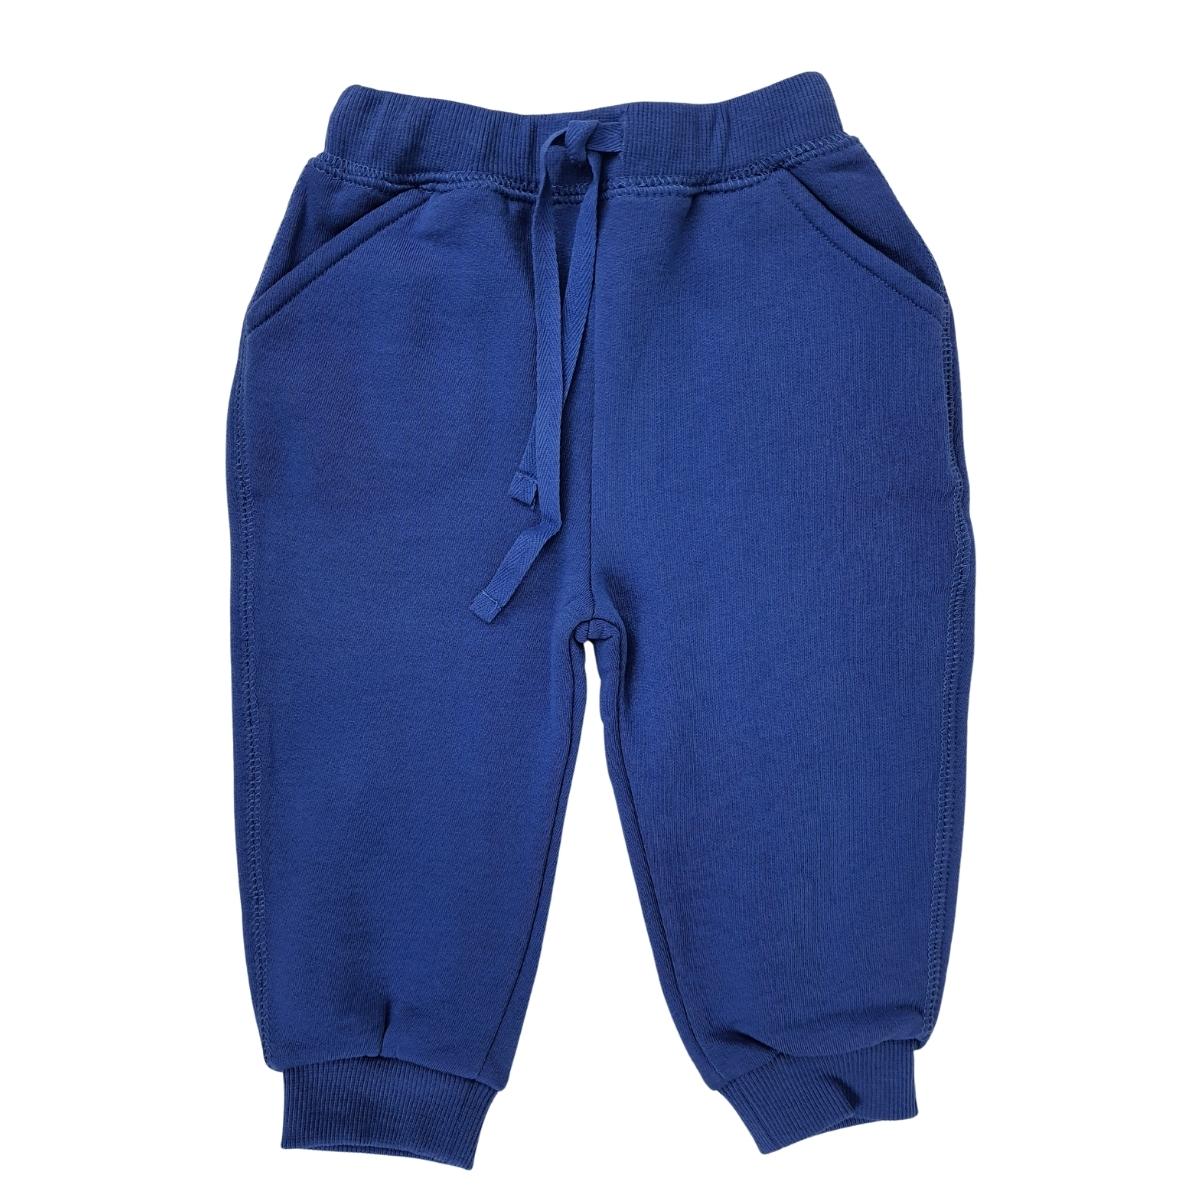 Pantalon Babycottons Sweatpant Frisa W.Colors Azul Paris